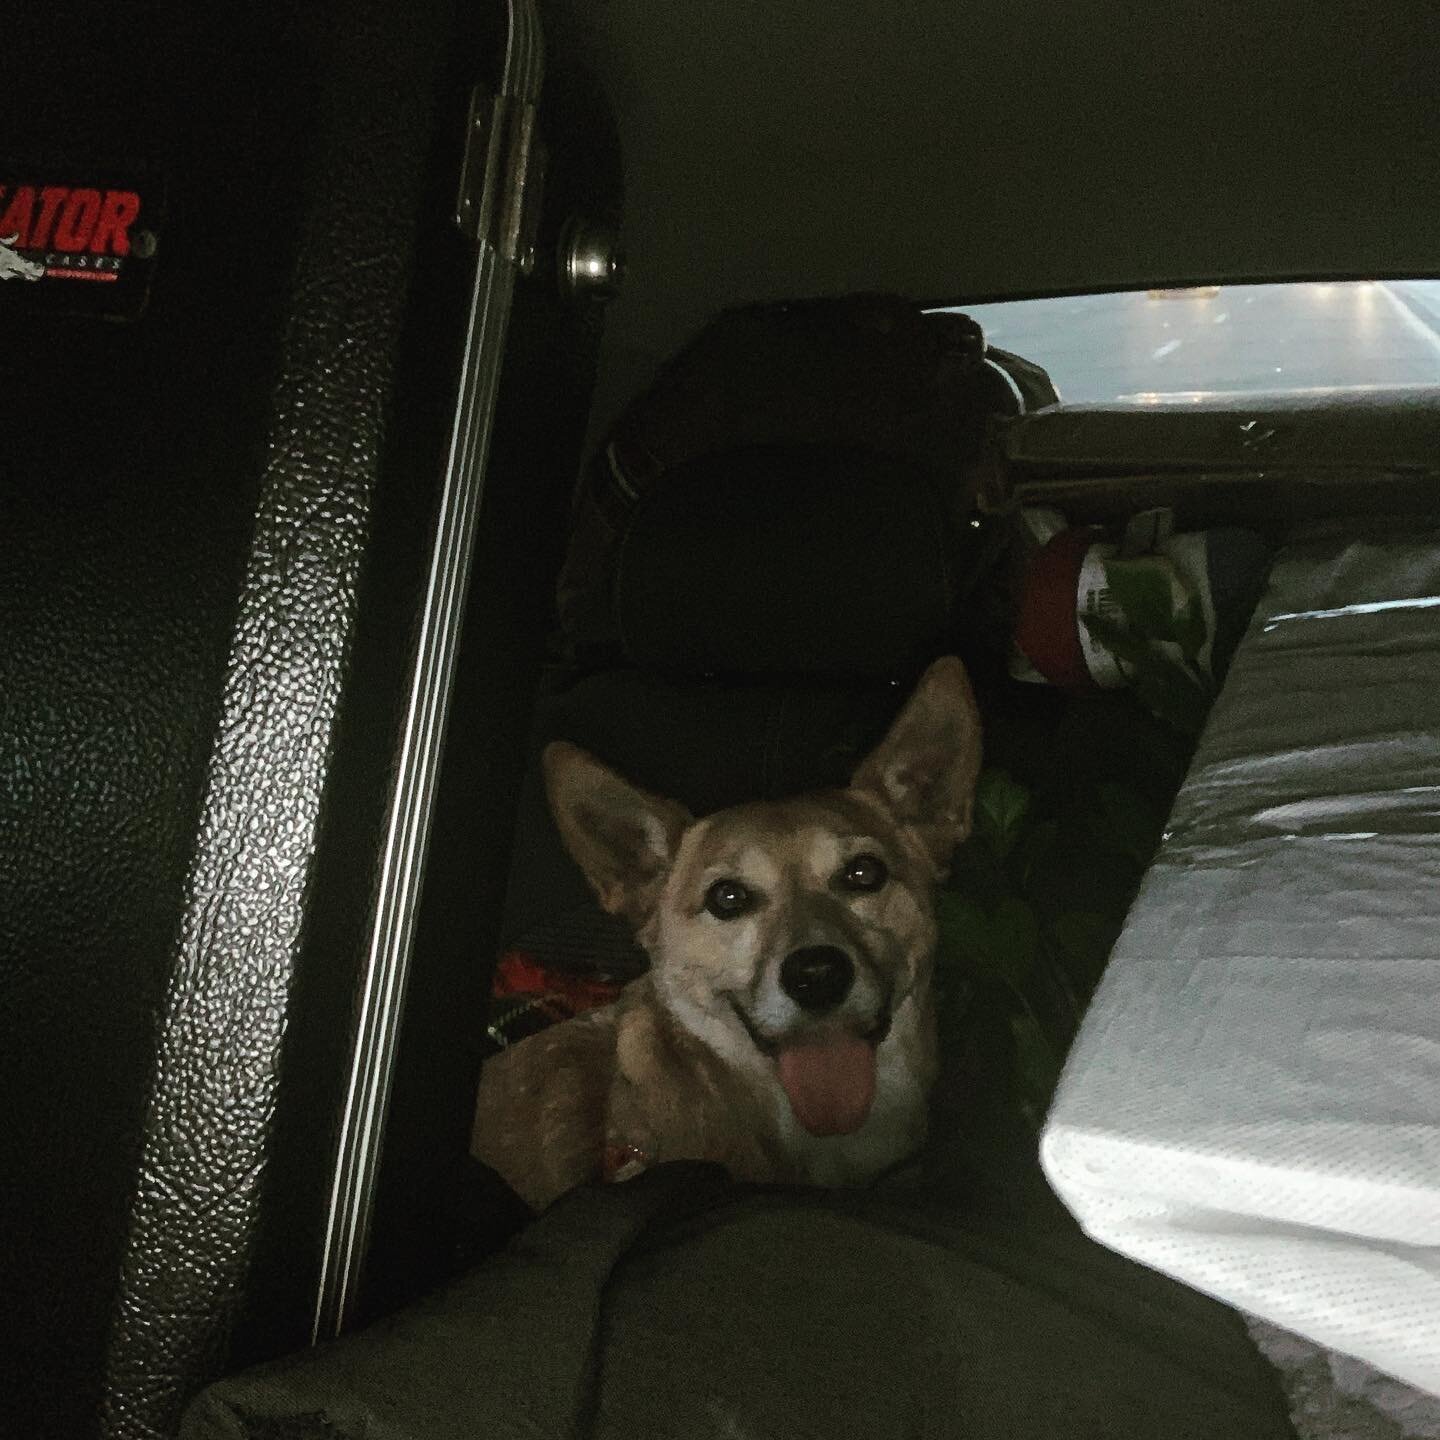 LA bound and ready for his close up. @corgiish 

#dogsofinstagram #corgisofinstagram